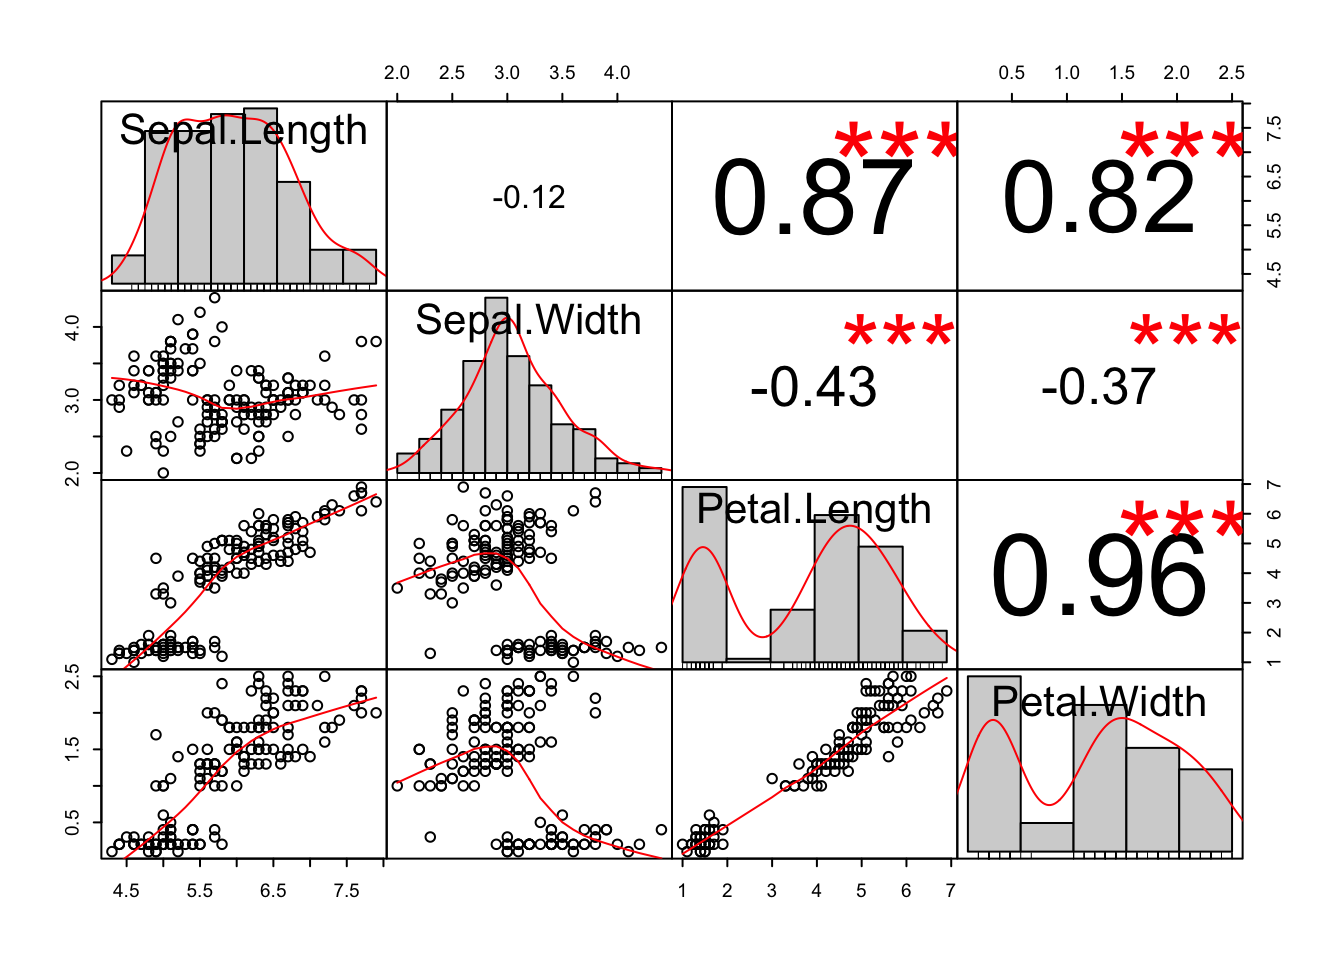 An example of a SPLOM (scatter plot matrix) and a correlation matrix.